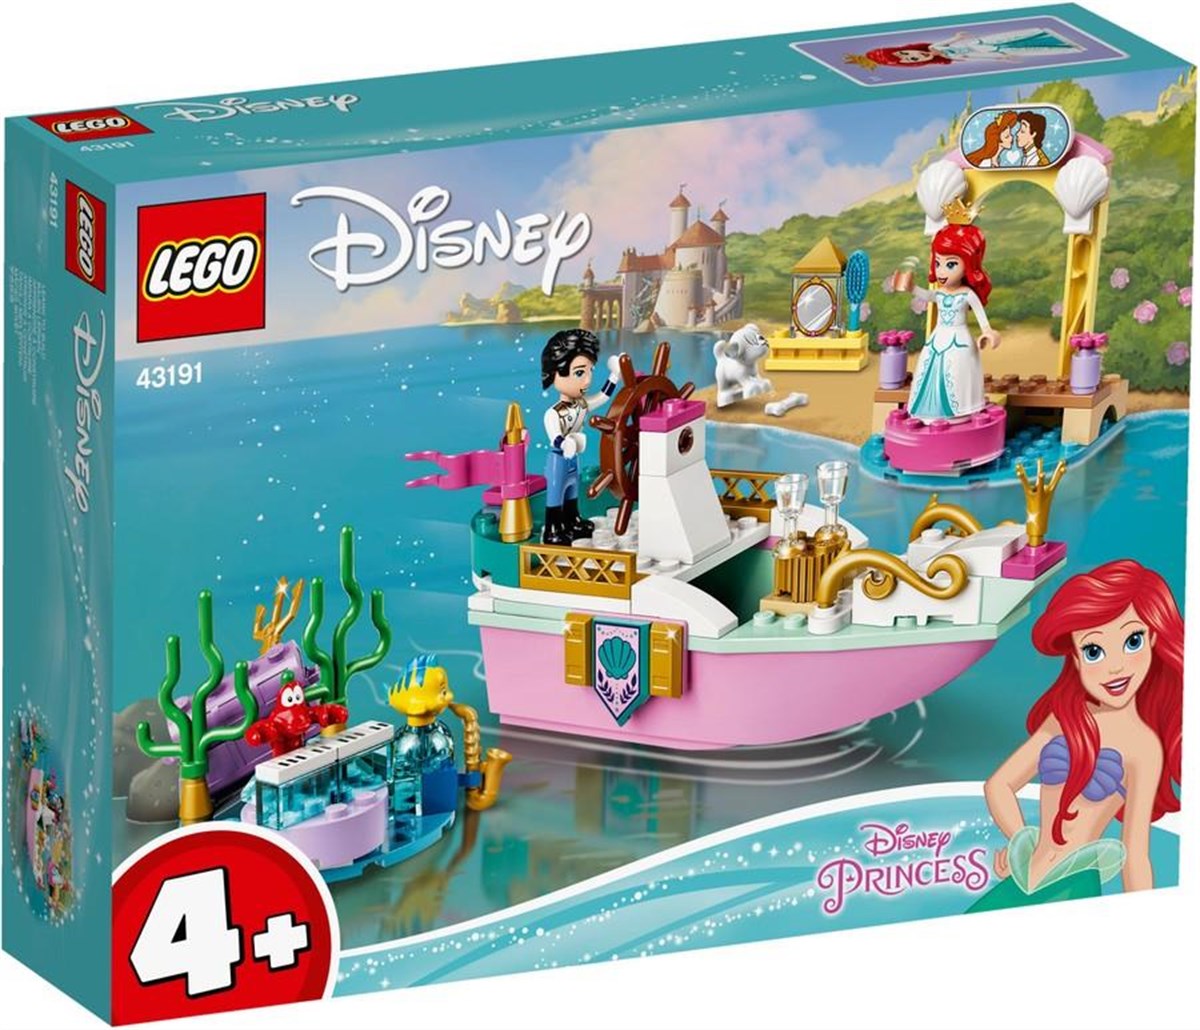 Lego Disney Princess Ariel’in Kutlama Teknesi 43191 | Toysall